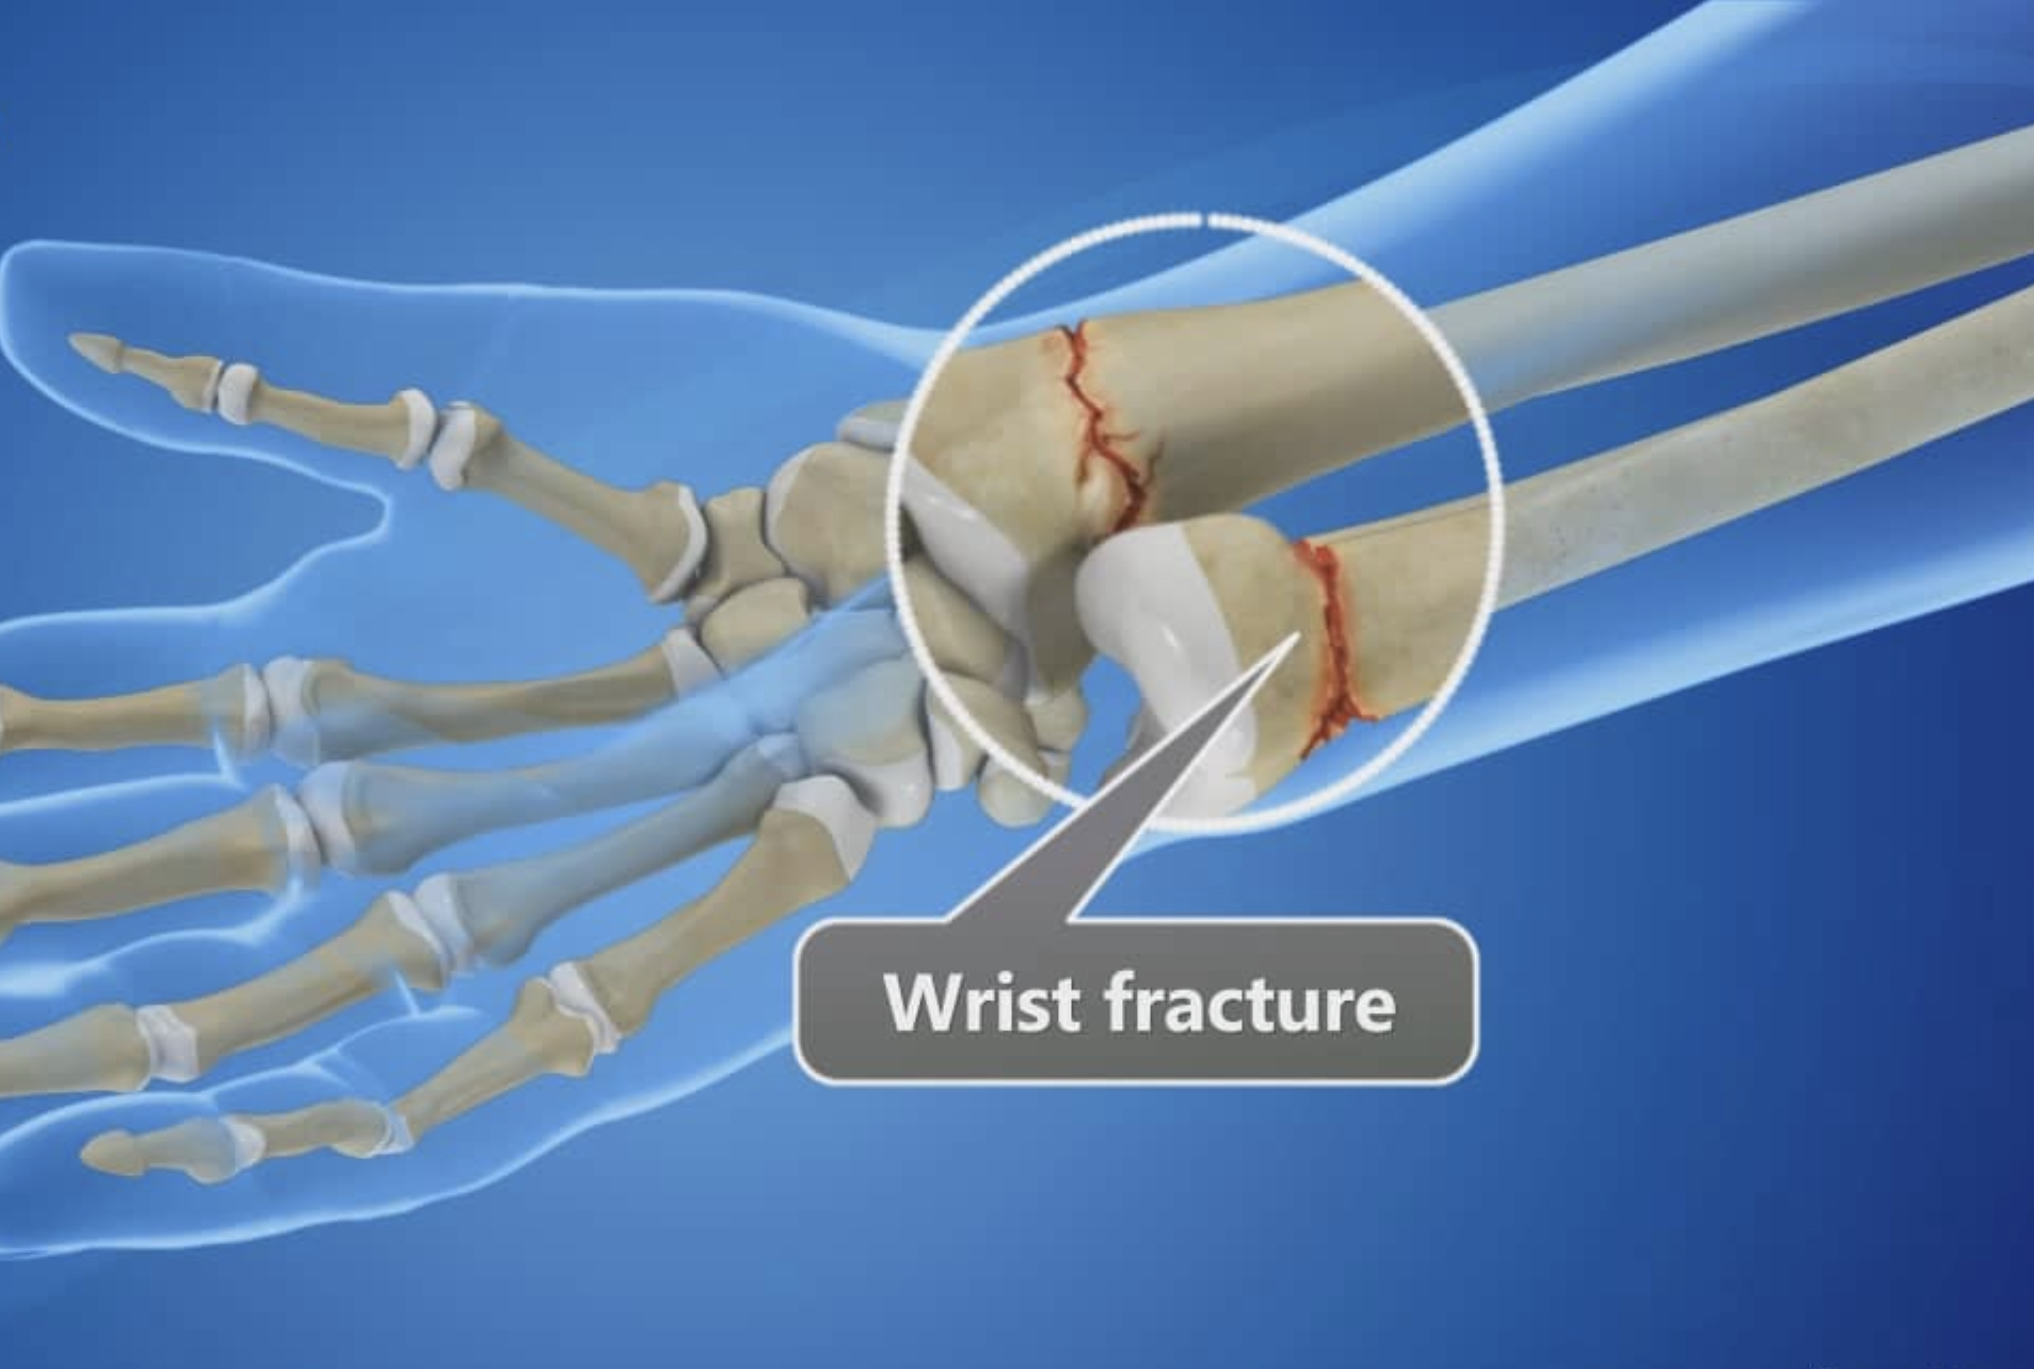 Wrist fracture